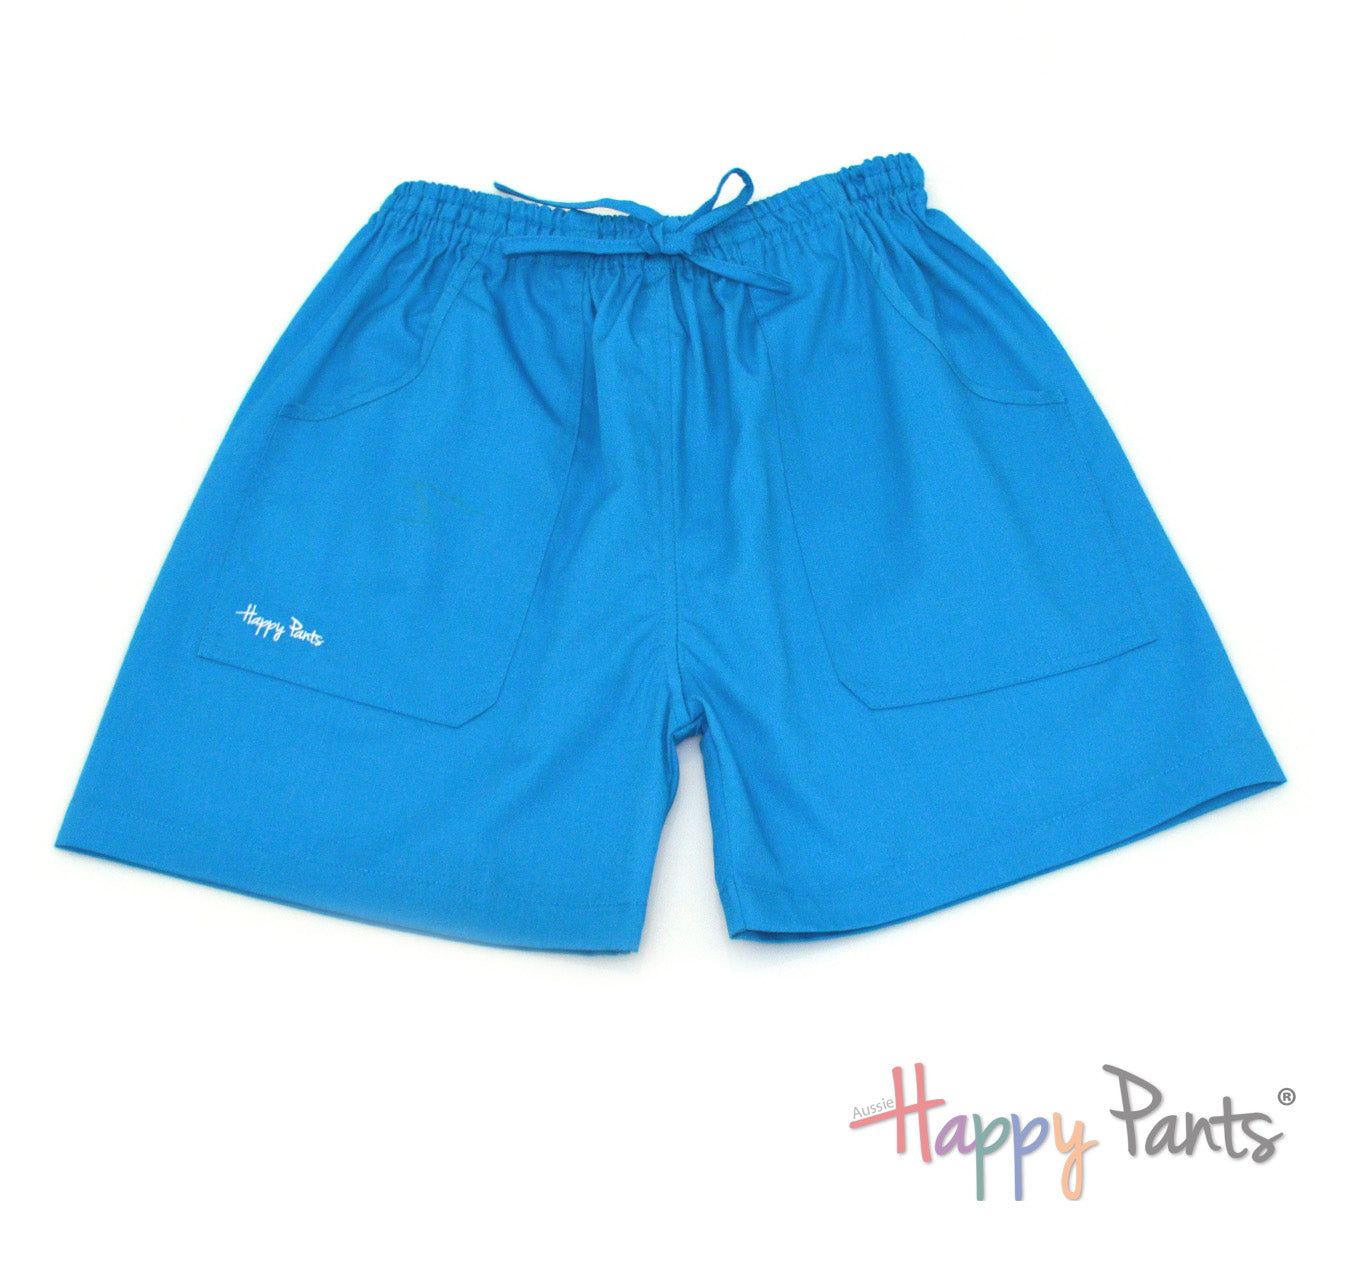 Blue aqua cotton shorts elastic waist summer Happy Pants fun and colourful clothes